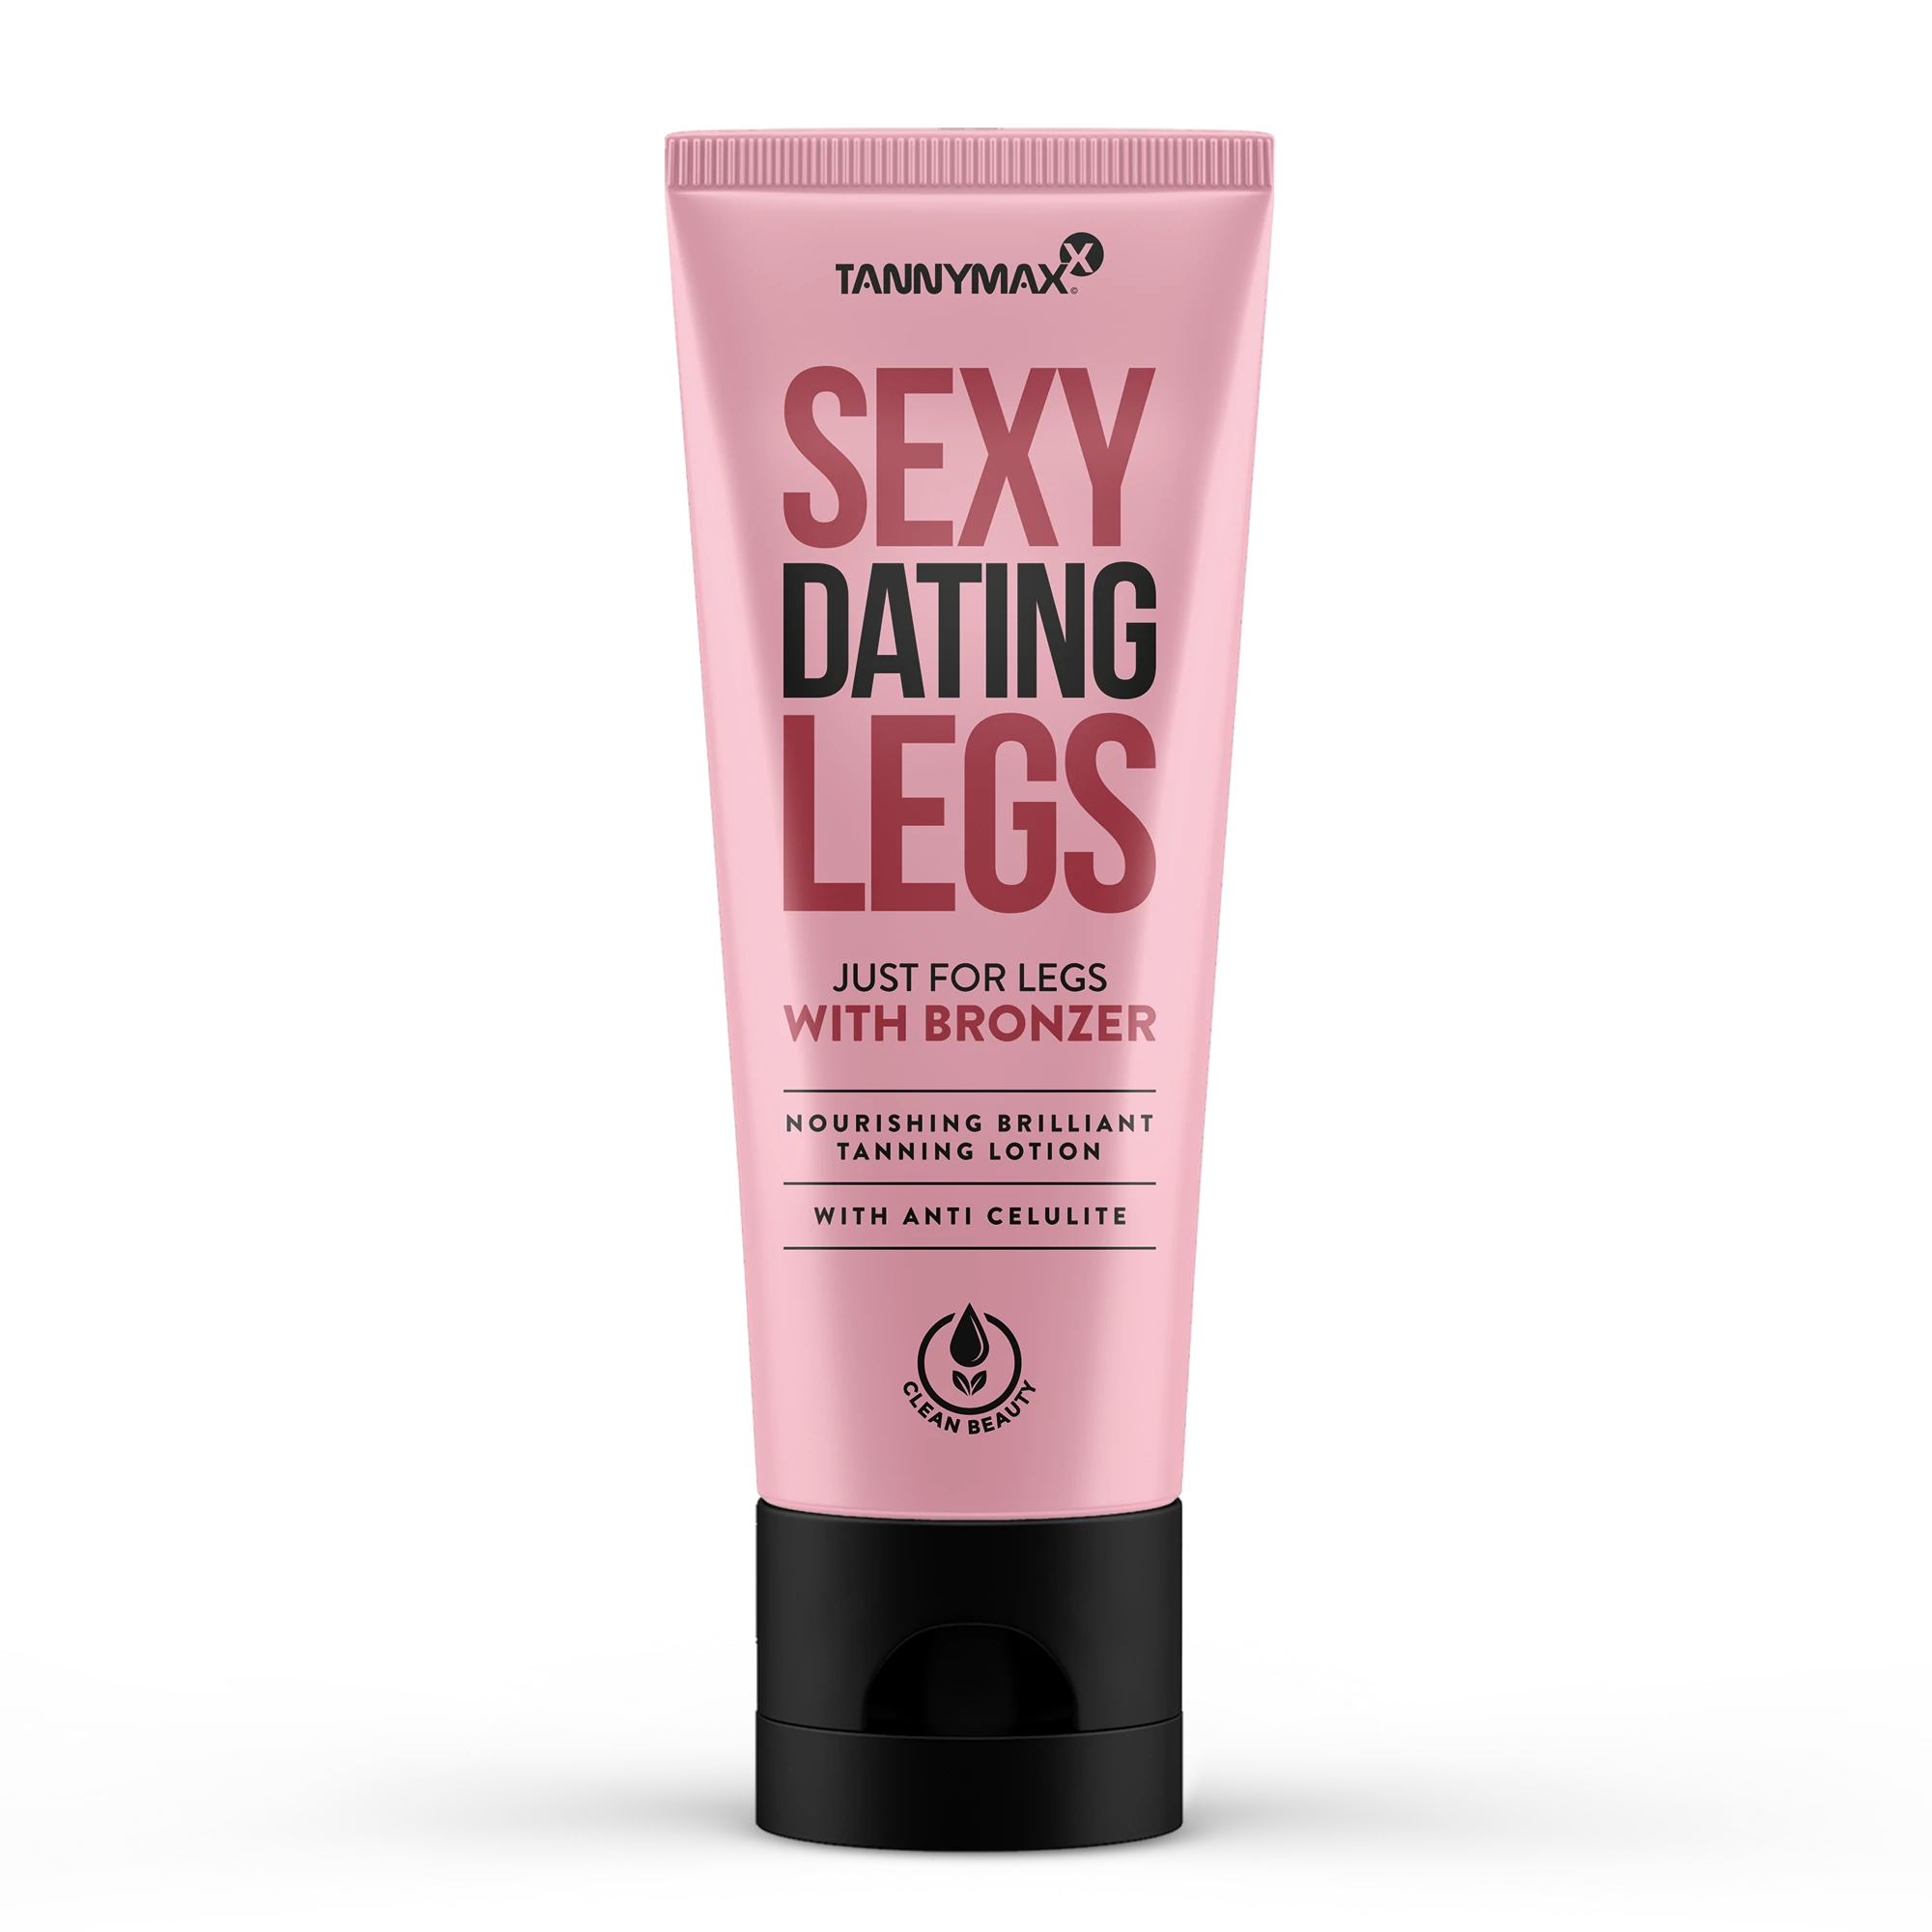 Tannymaxx Sexy Datings Legs Bronzer  